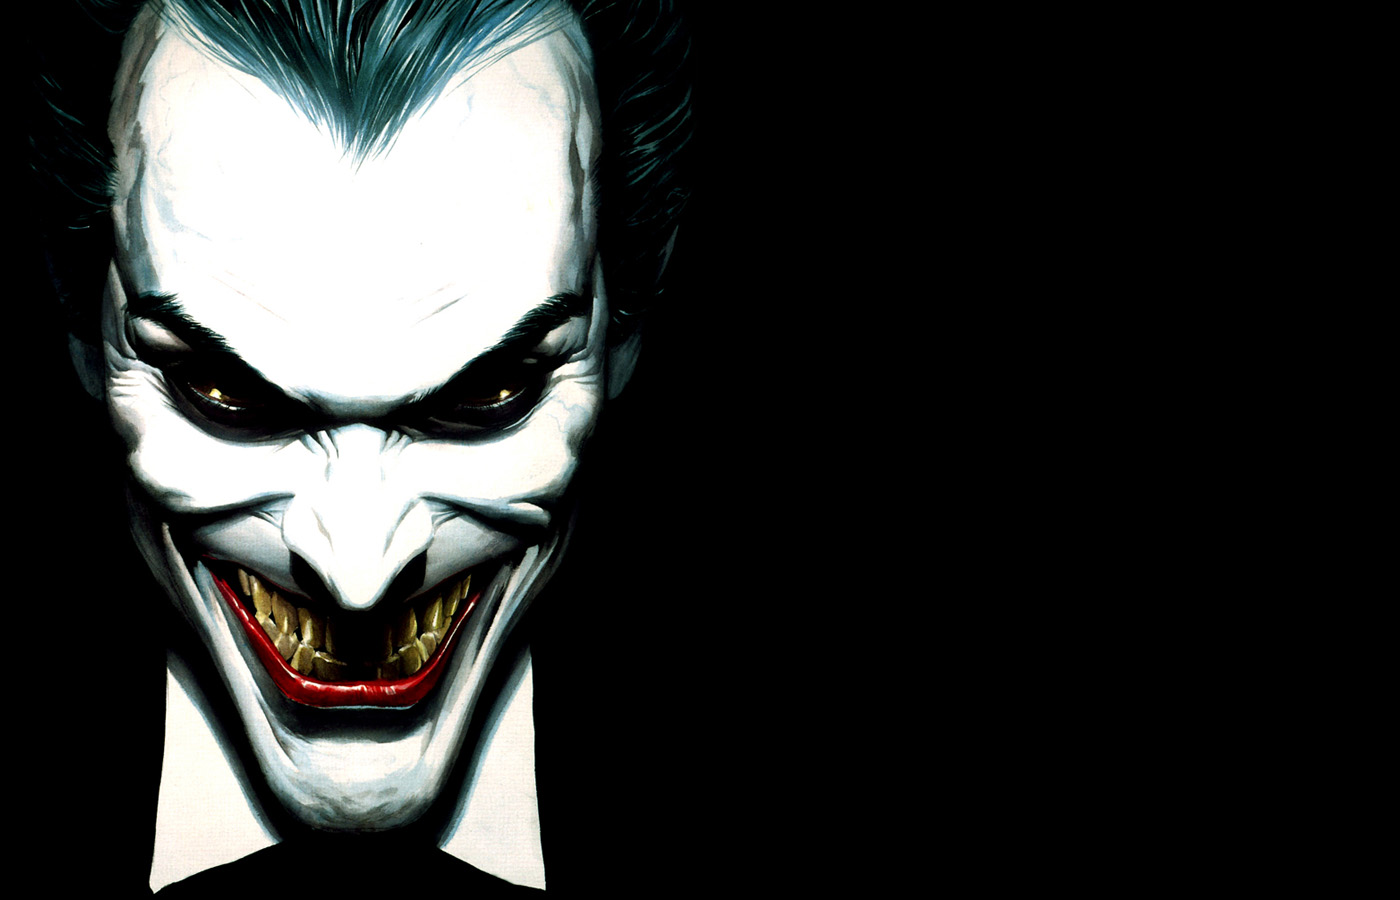 46+] Joker Face Wallpaper - WallpaperSafari